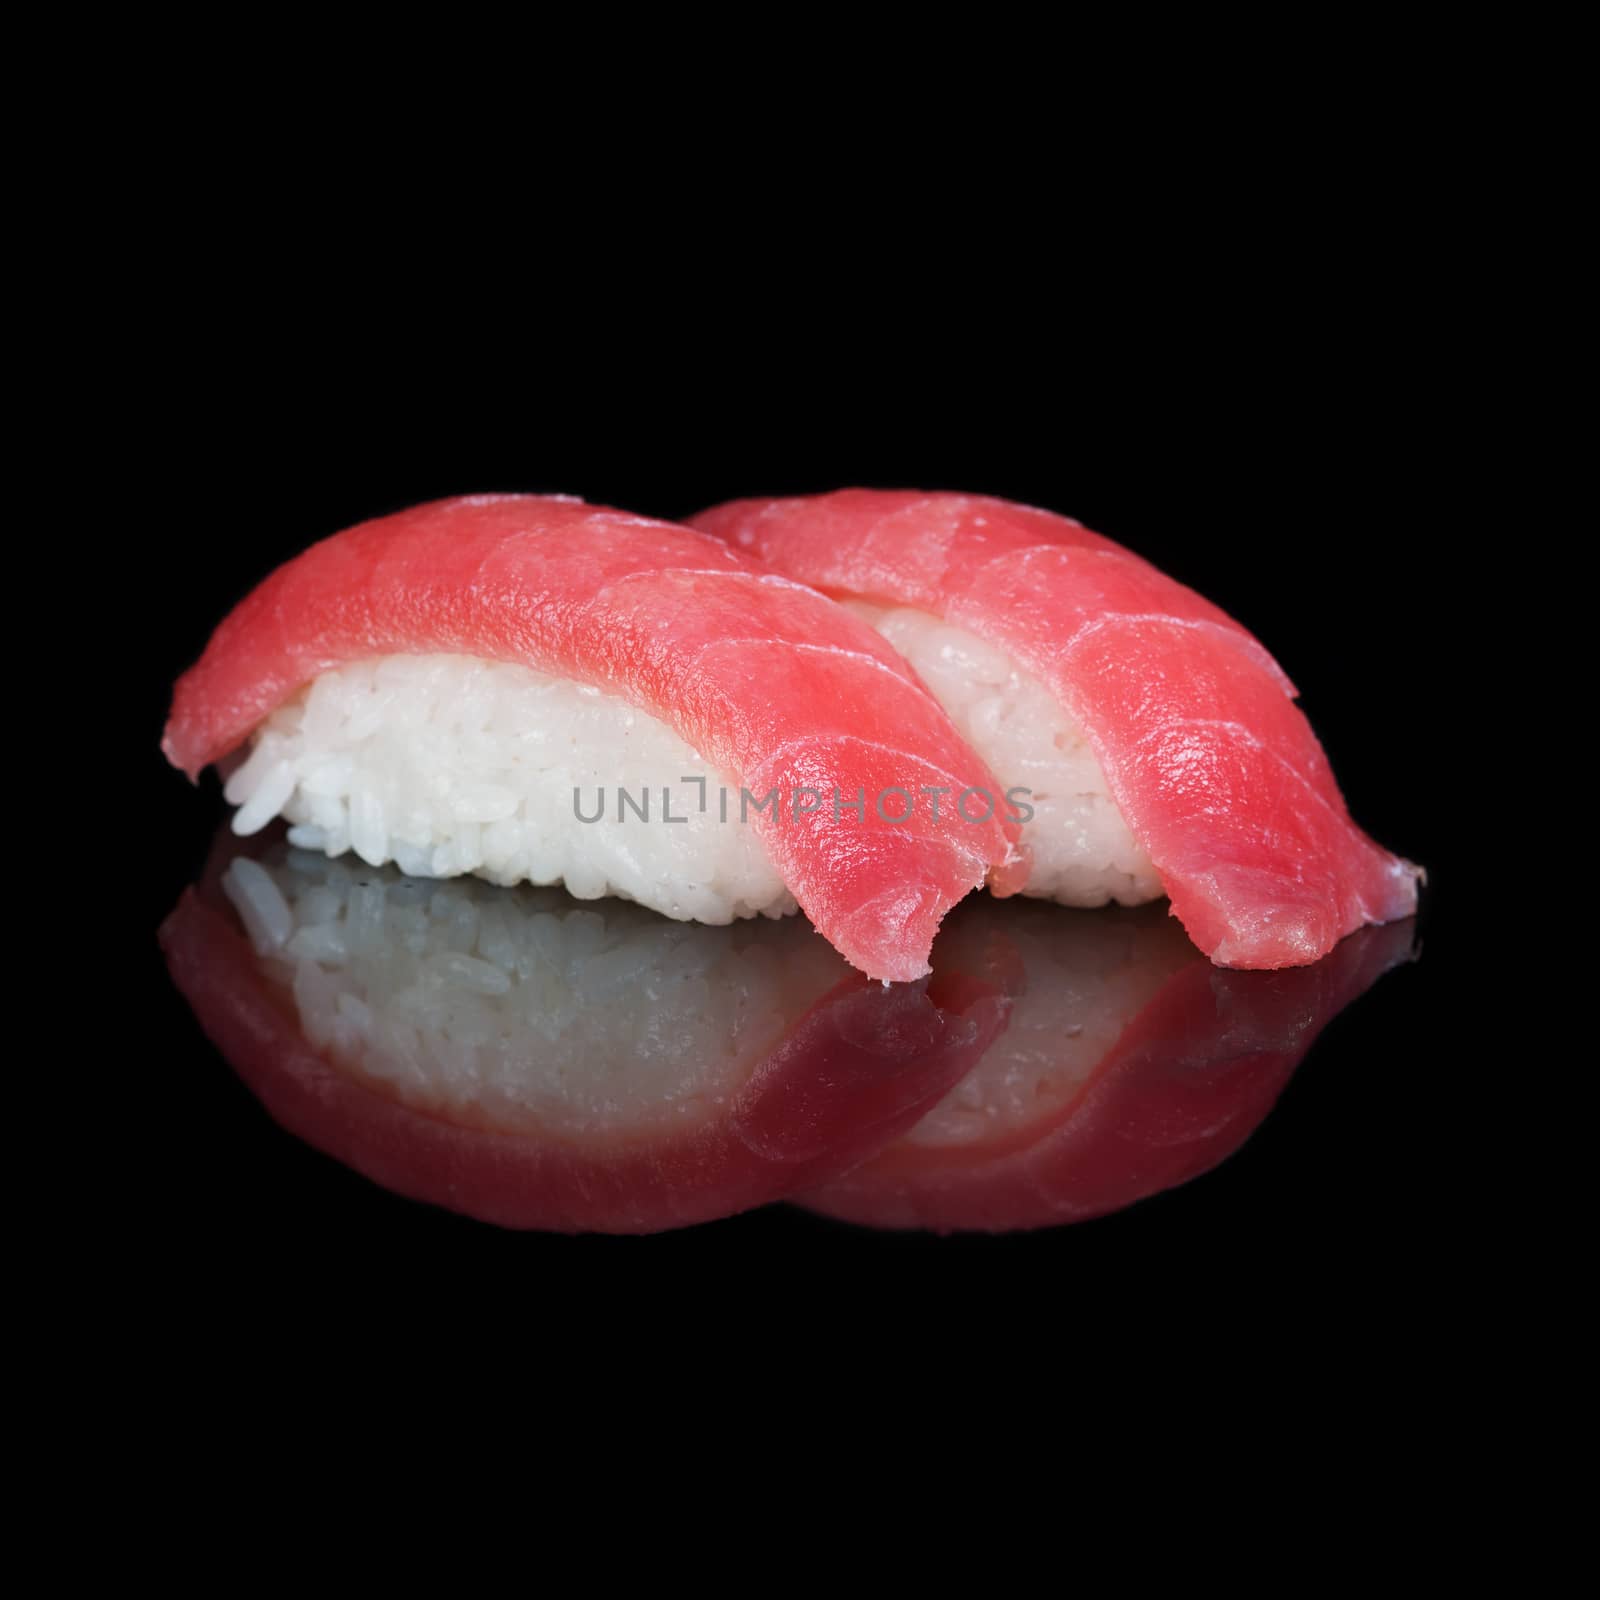 Tuna sushi by kzen